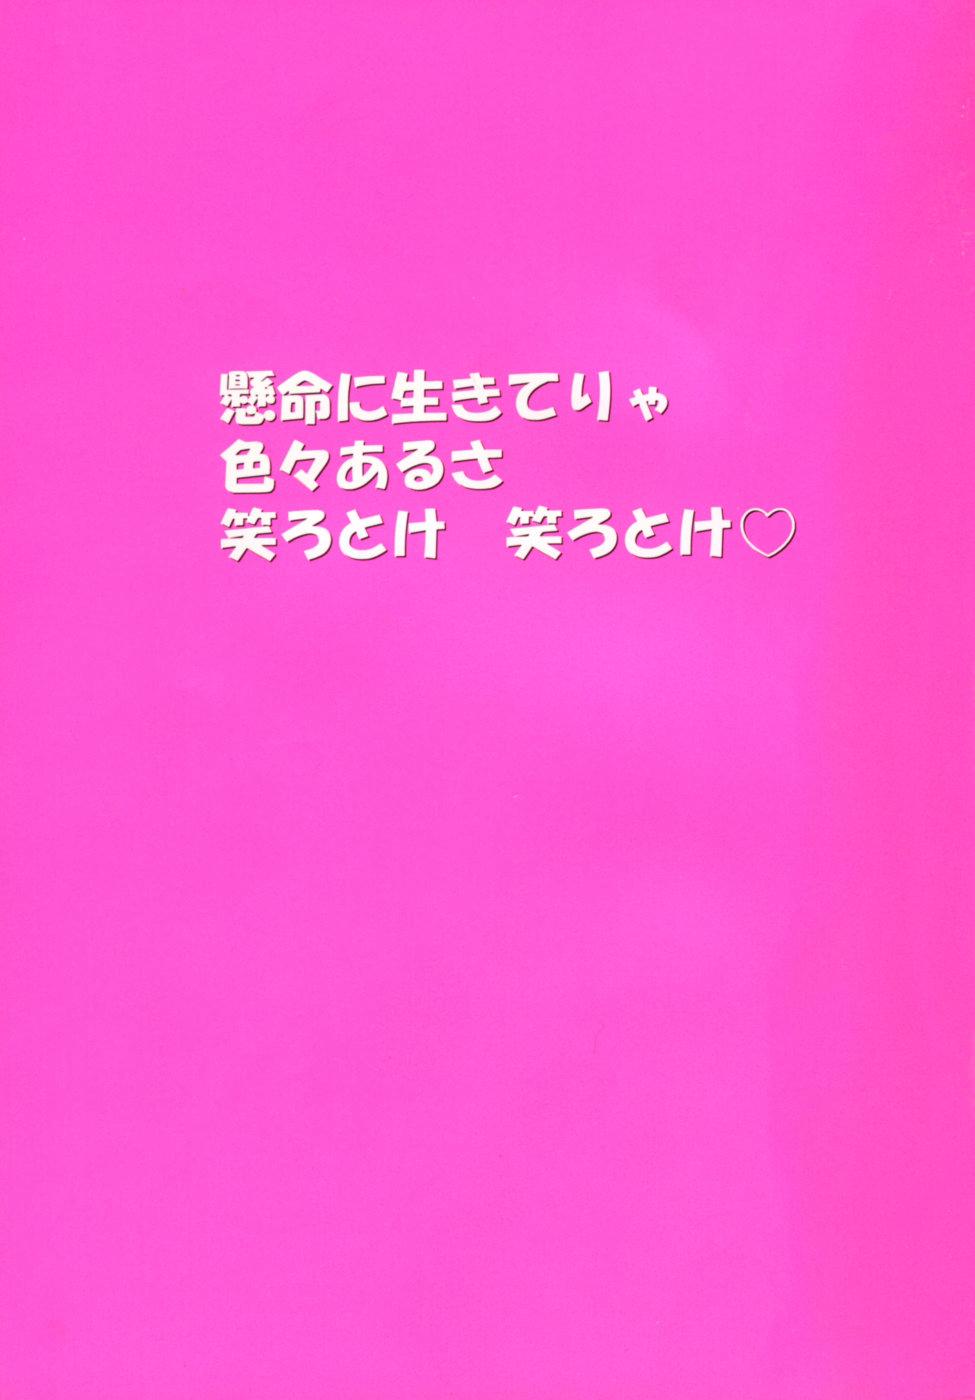 Shining Musume. 5. Five Sense of Love 4